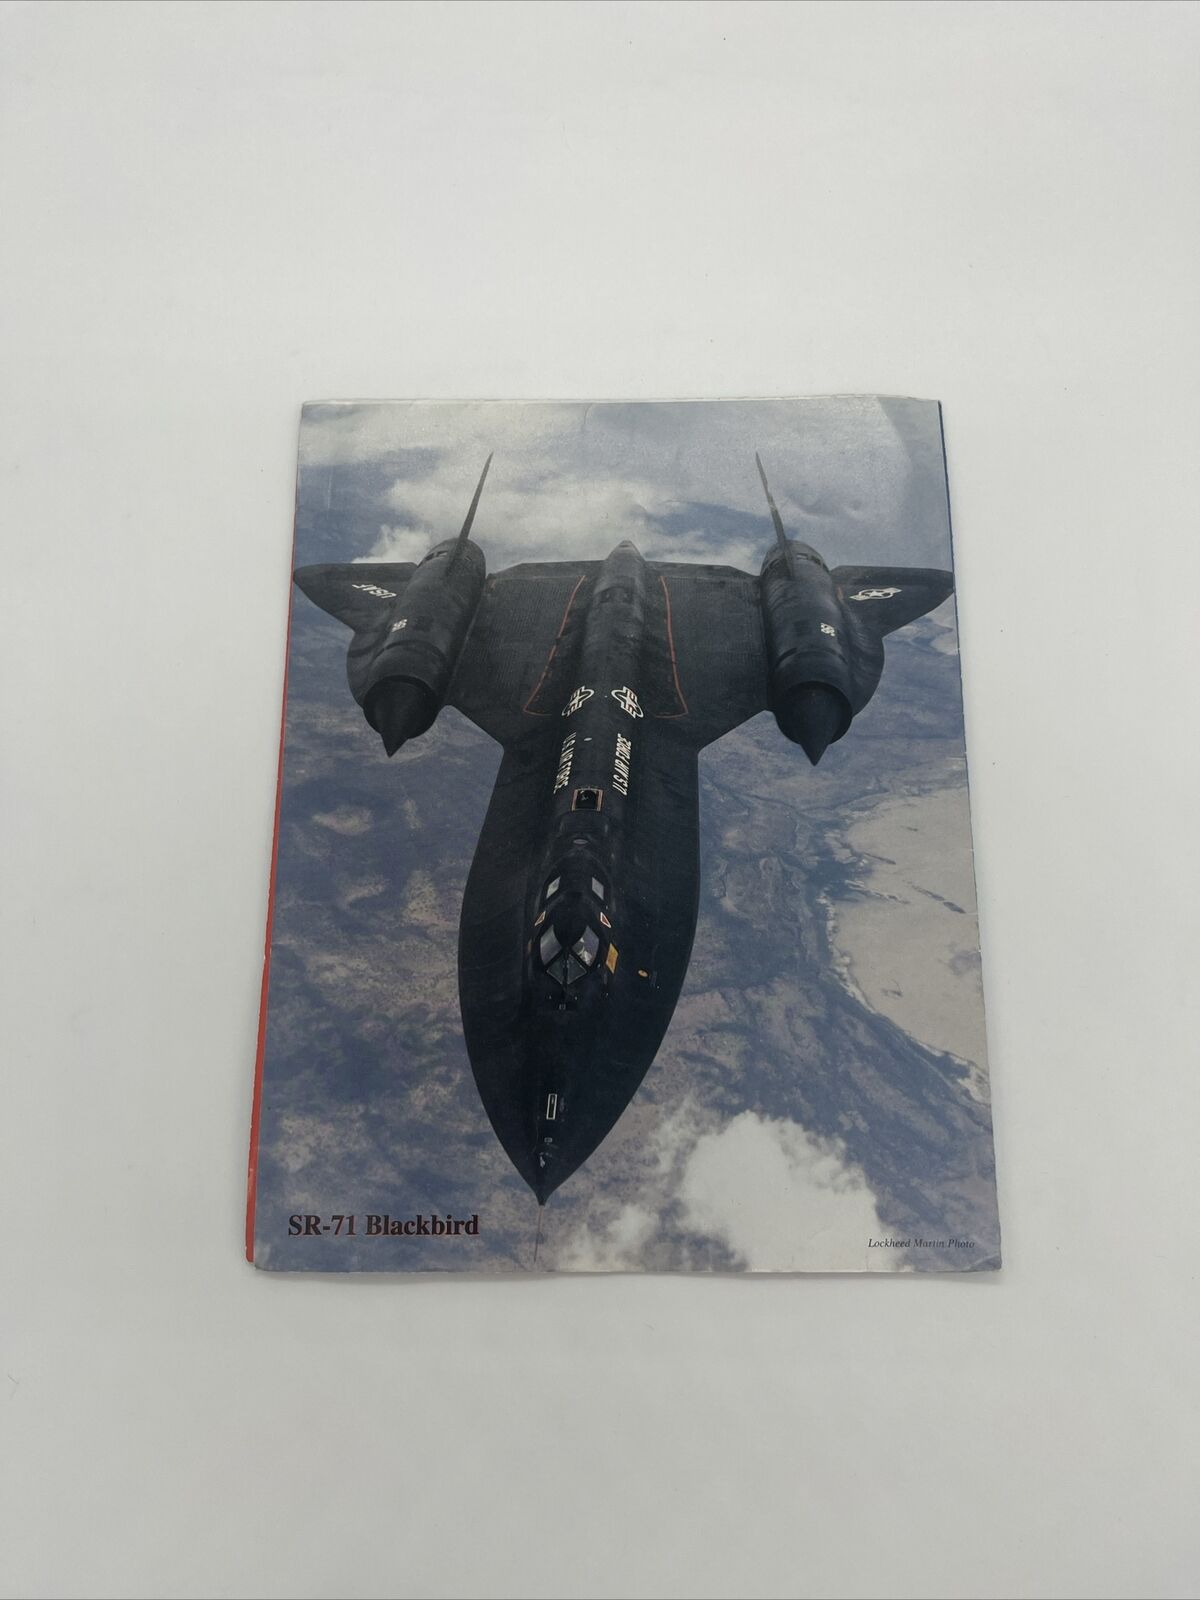 Two SR-71 Blackbird Vintage Photo Posters Air Force Plane Stealth Jet